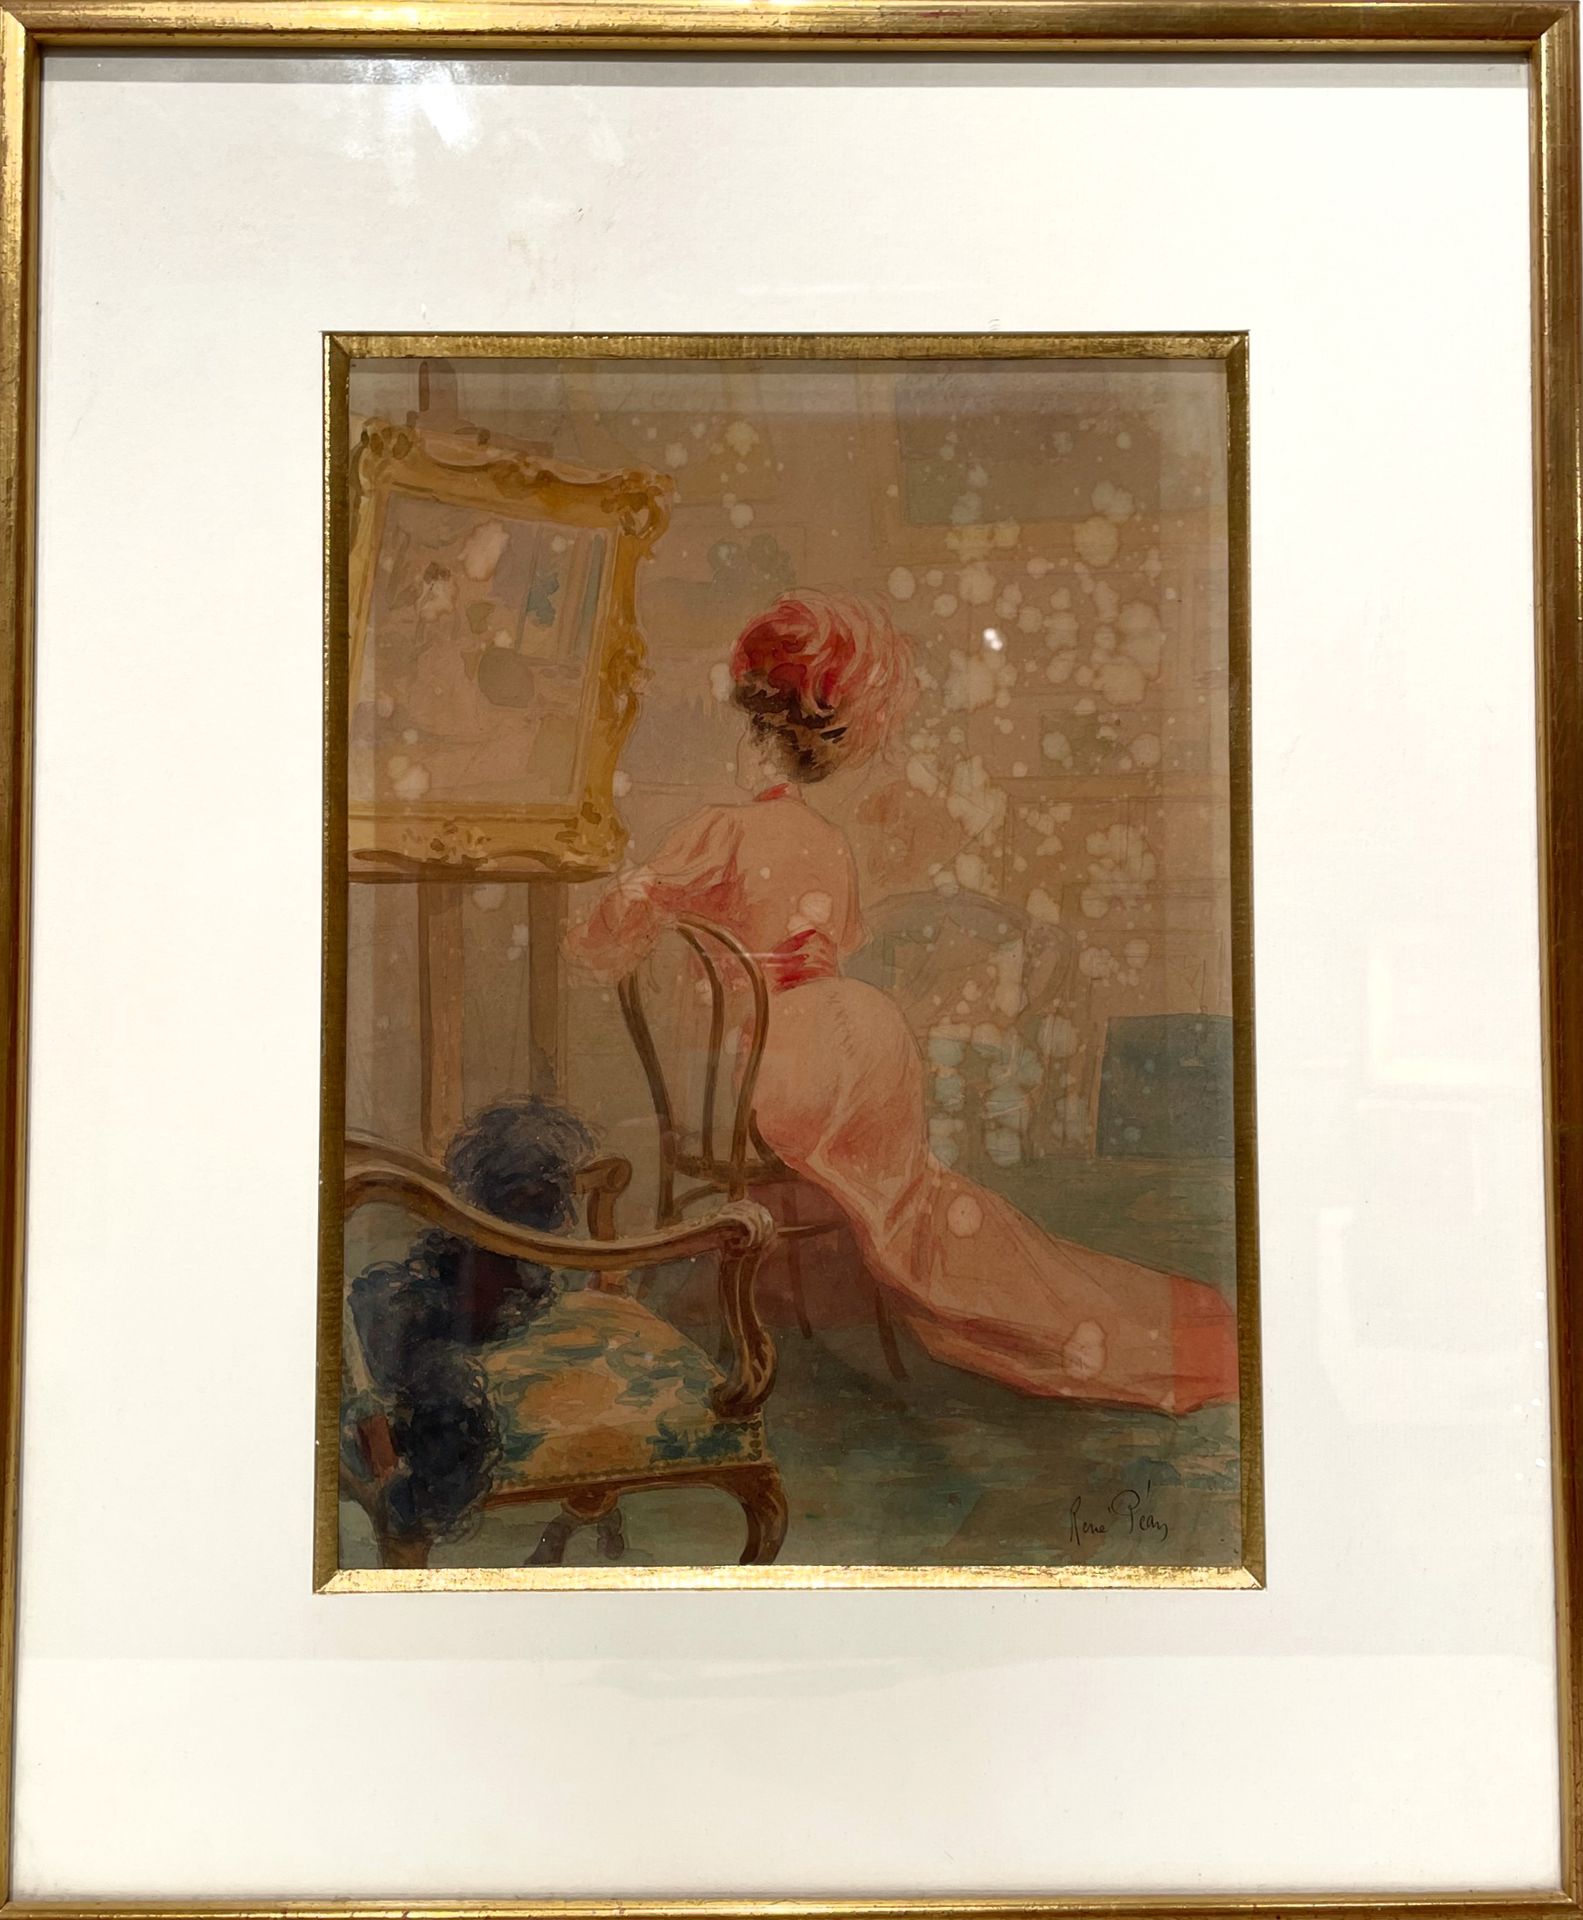 Null 勒内-佩安 (1875-1955)

加兰特在欣赏一幅画

水彩画

30x22厘米